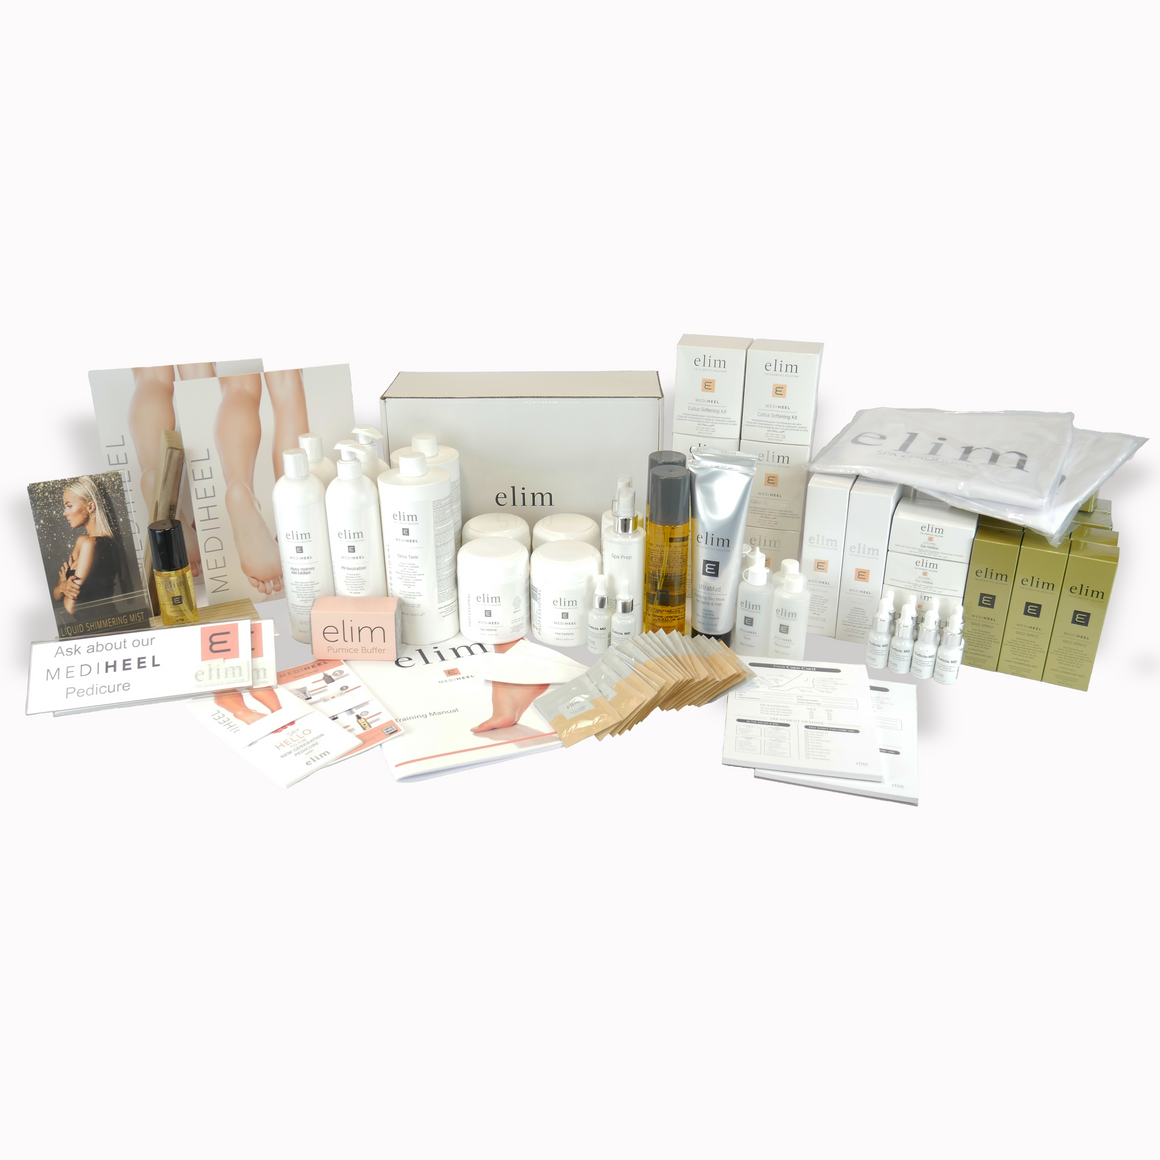 MEDIHEEL Salon Starter Kit